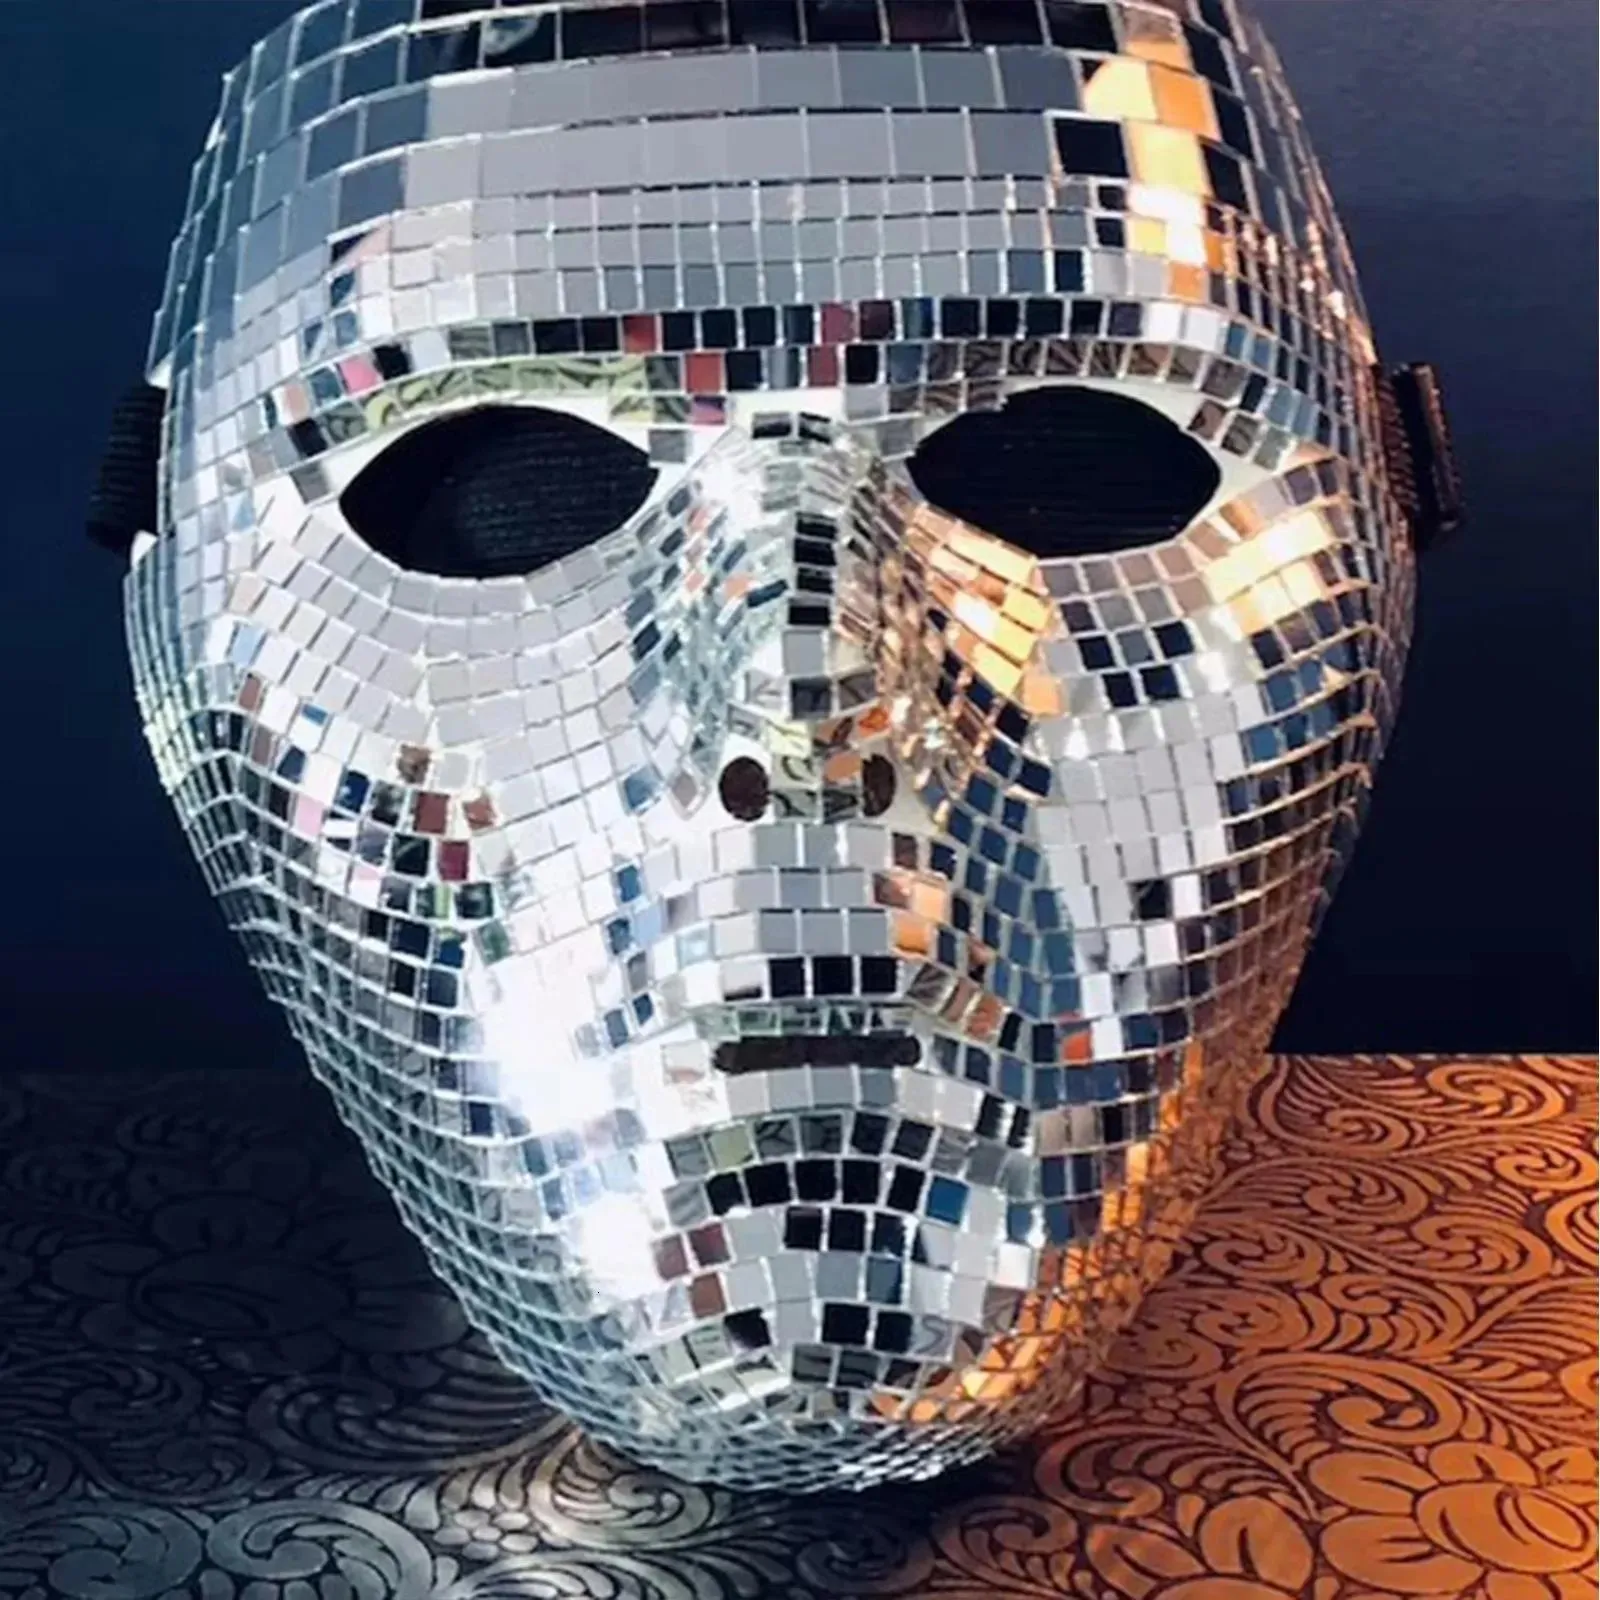 Maschere maschere maschere da discoteca scintillante maschera maschera maschera per specchio in vetro dj glac taping ballo bar per le vacanze decorazione 230603